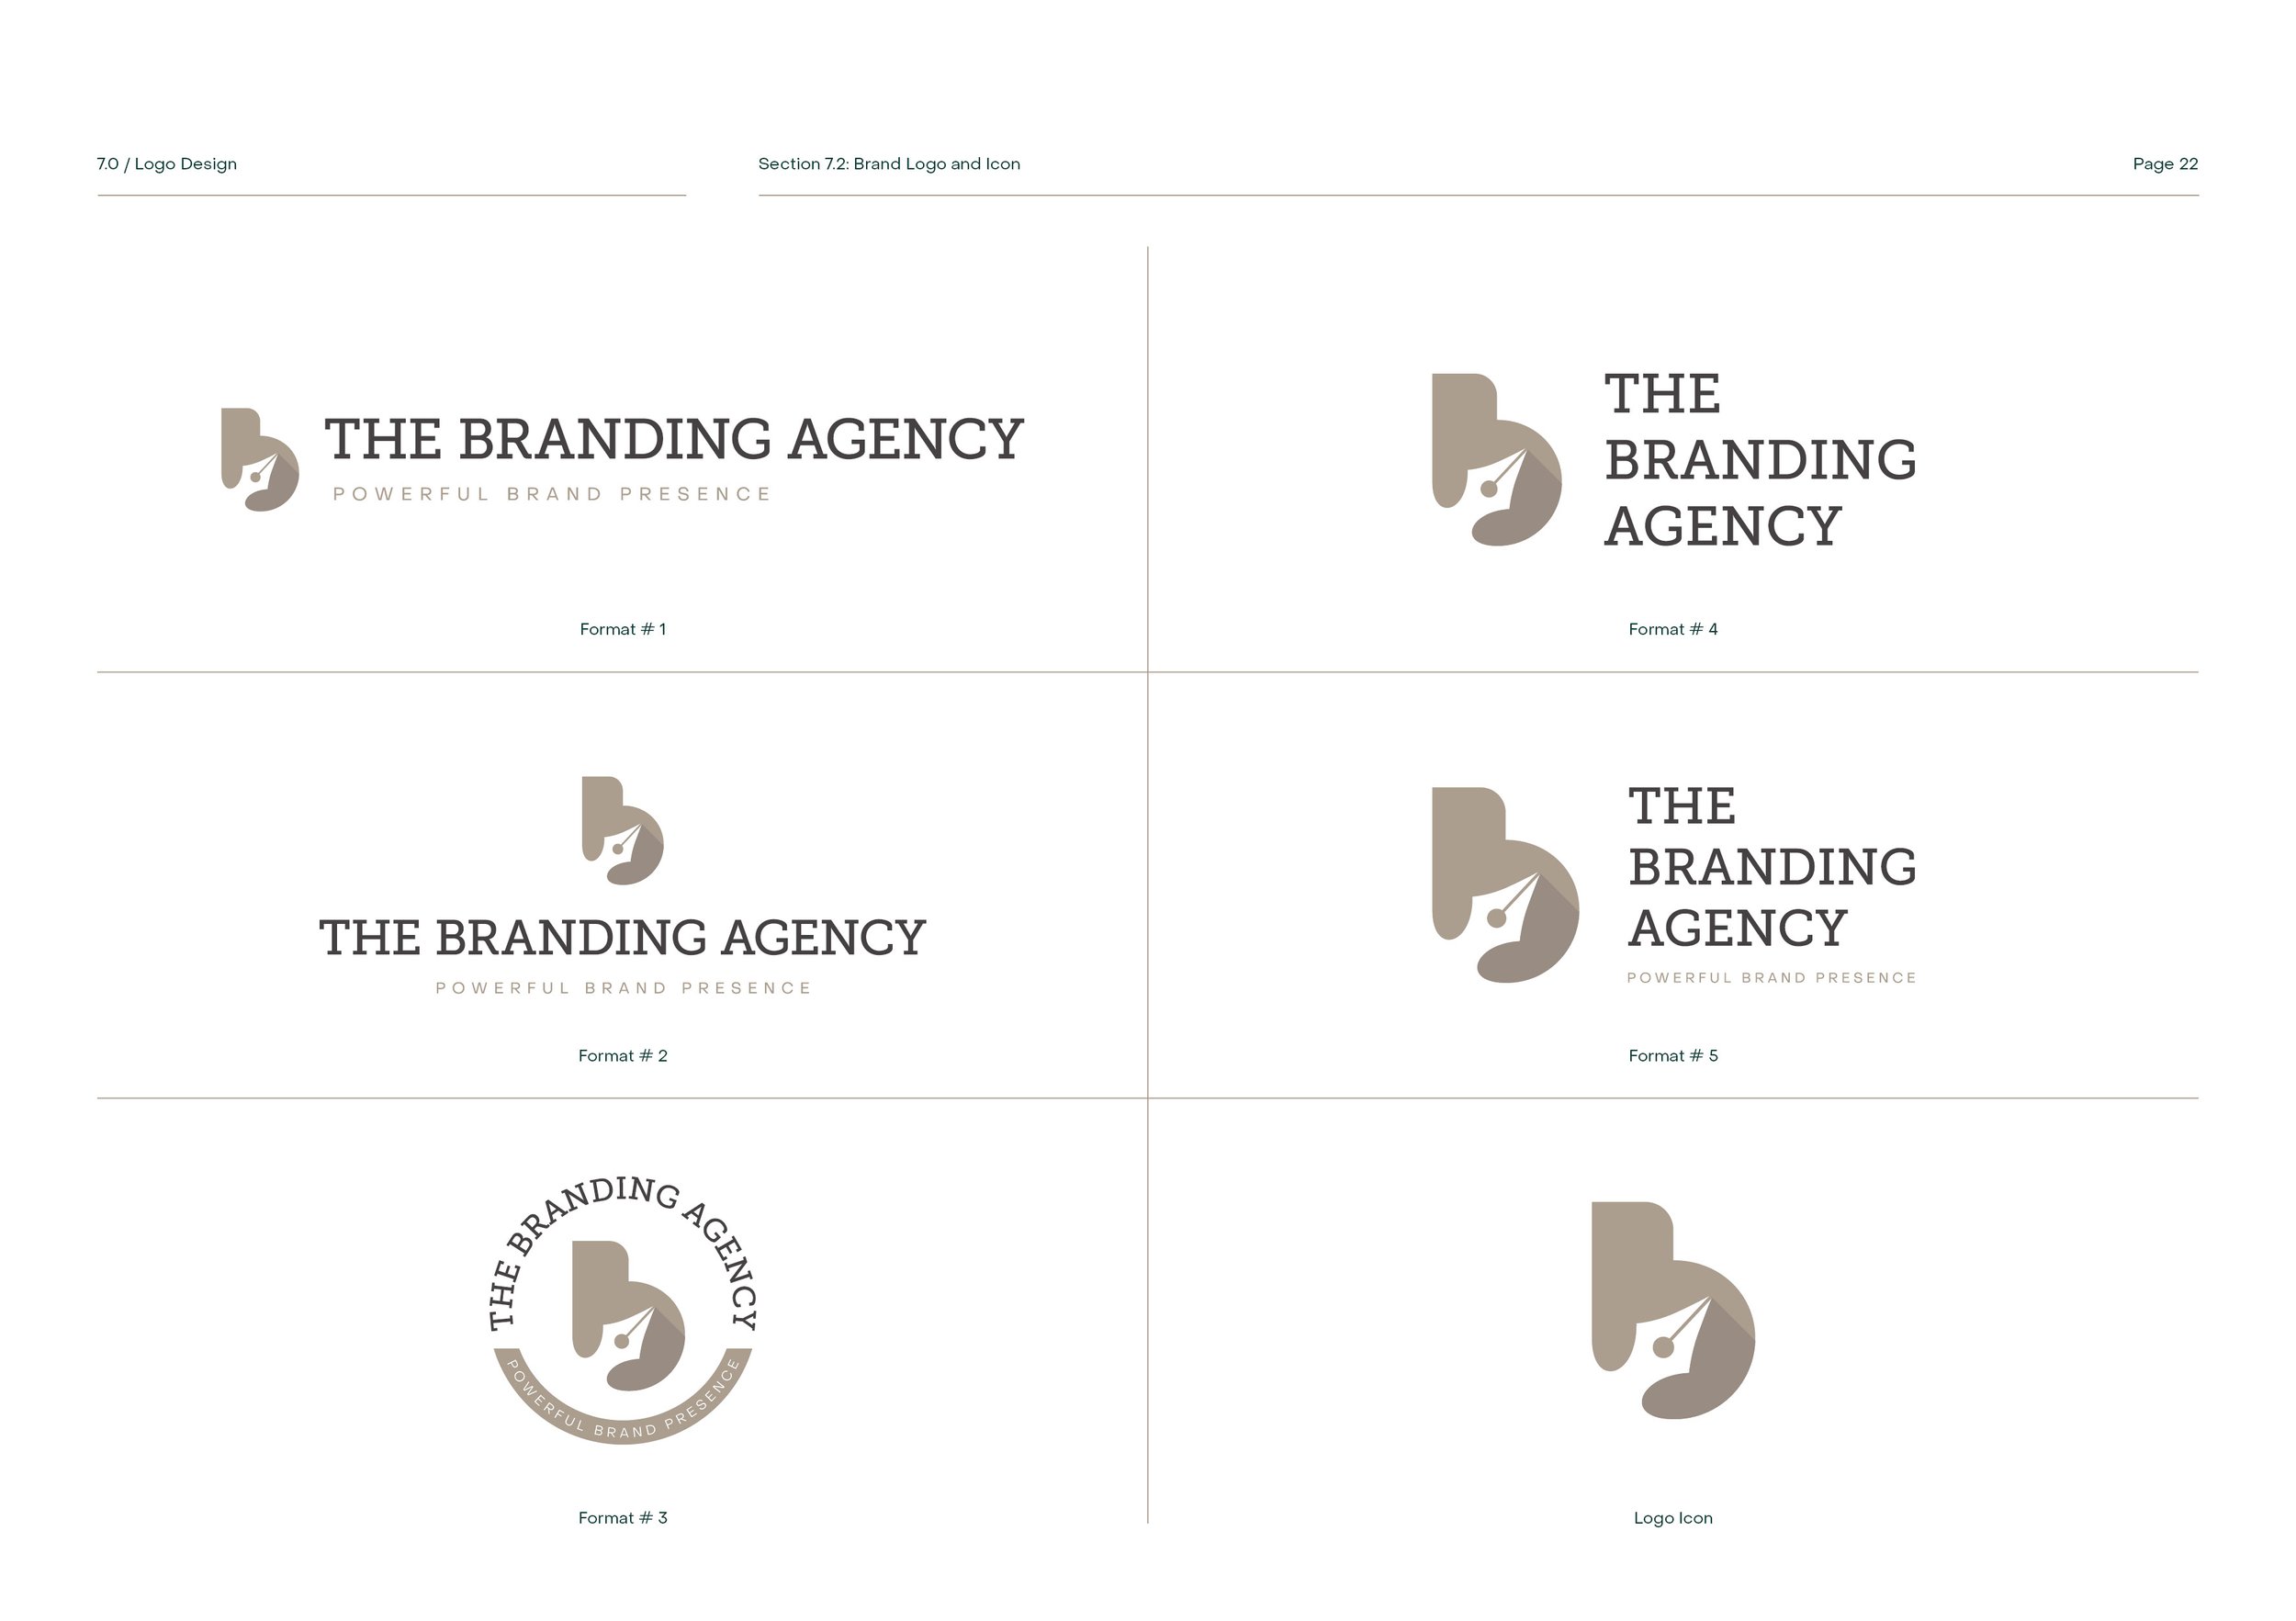 The Branding Agency - Brand Identity22.jpg